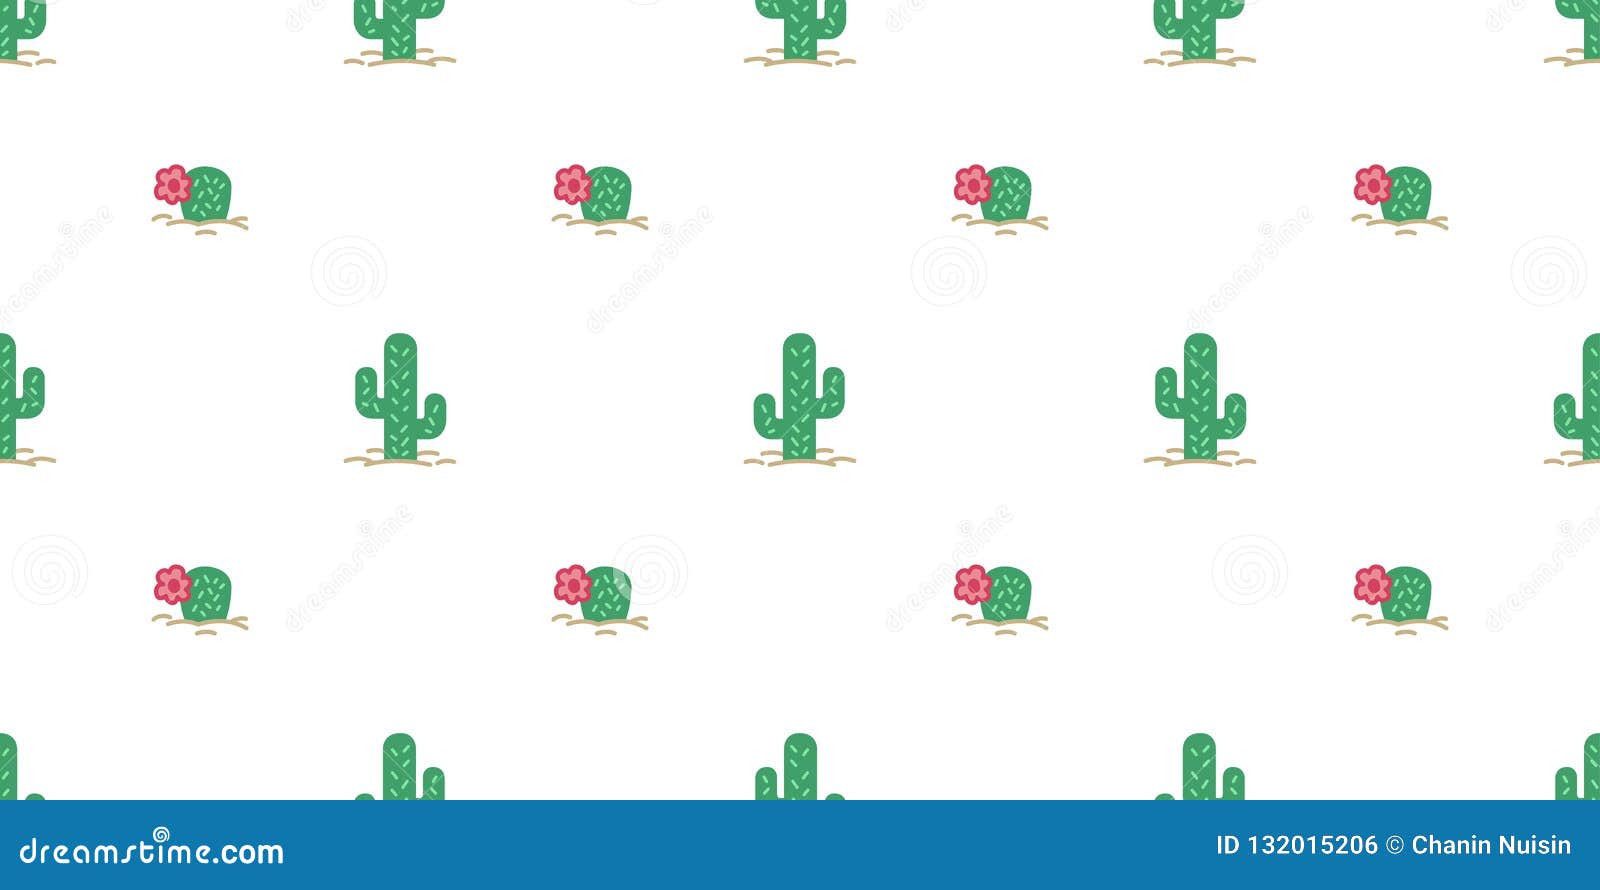 cactus seamless pattern  flower plant desert botanica garden summer  background repeat wallpaper